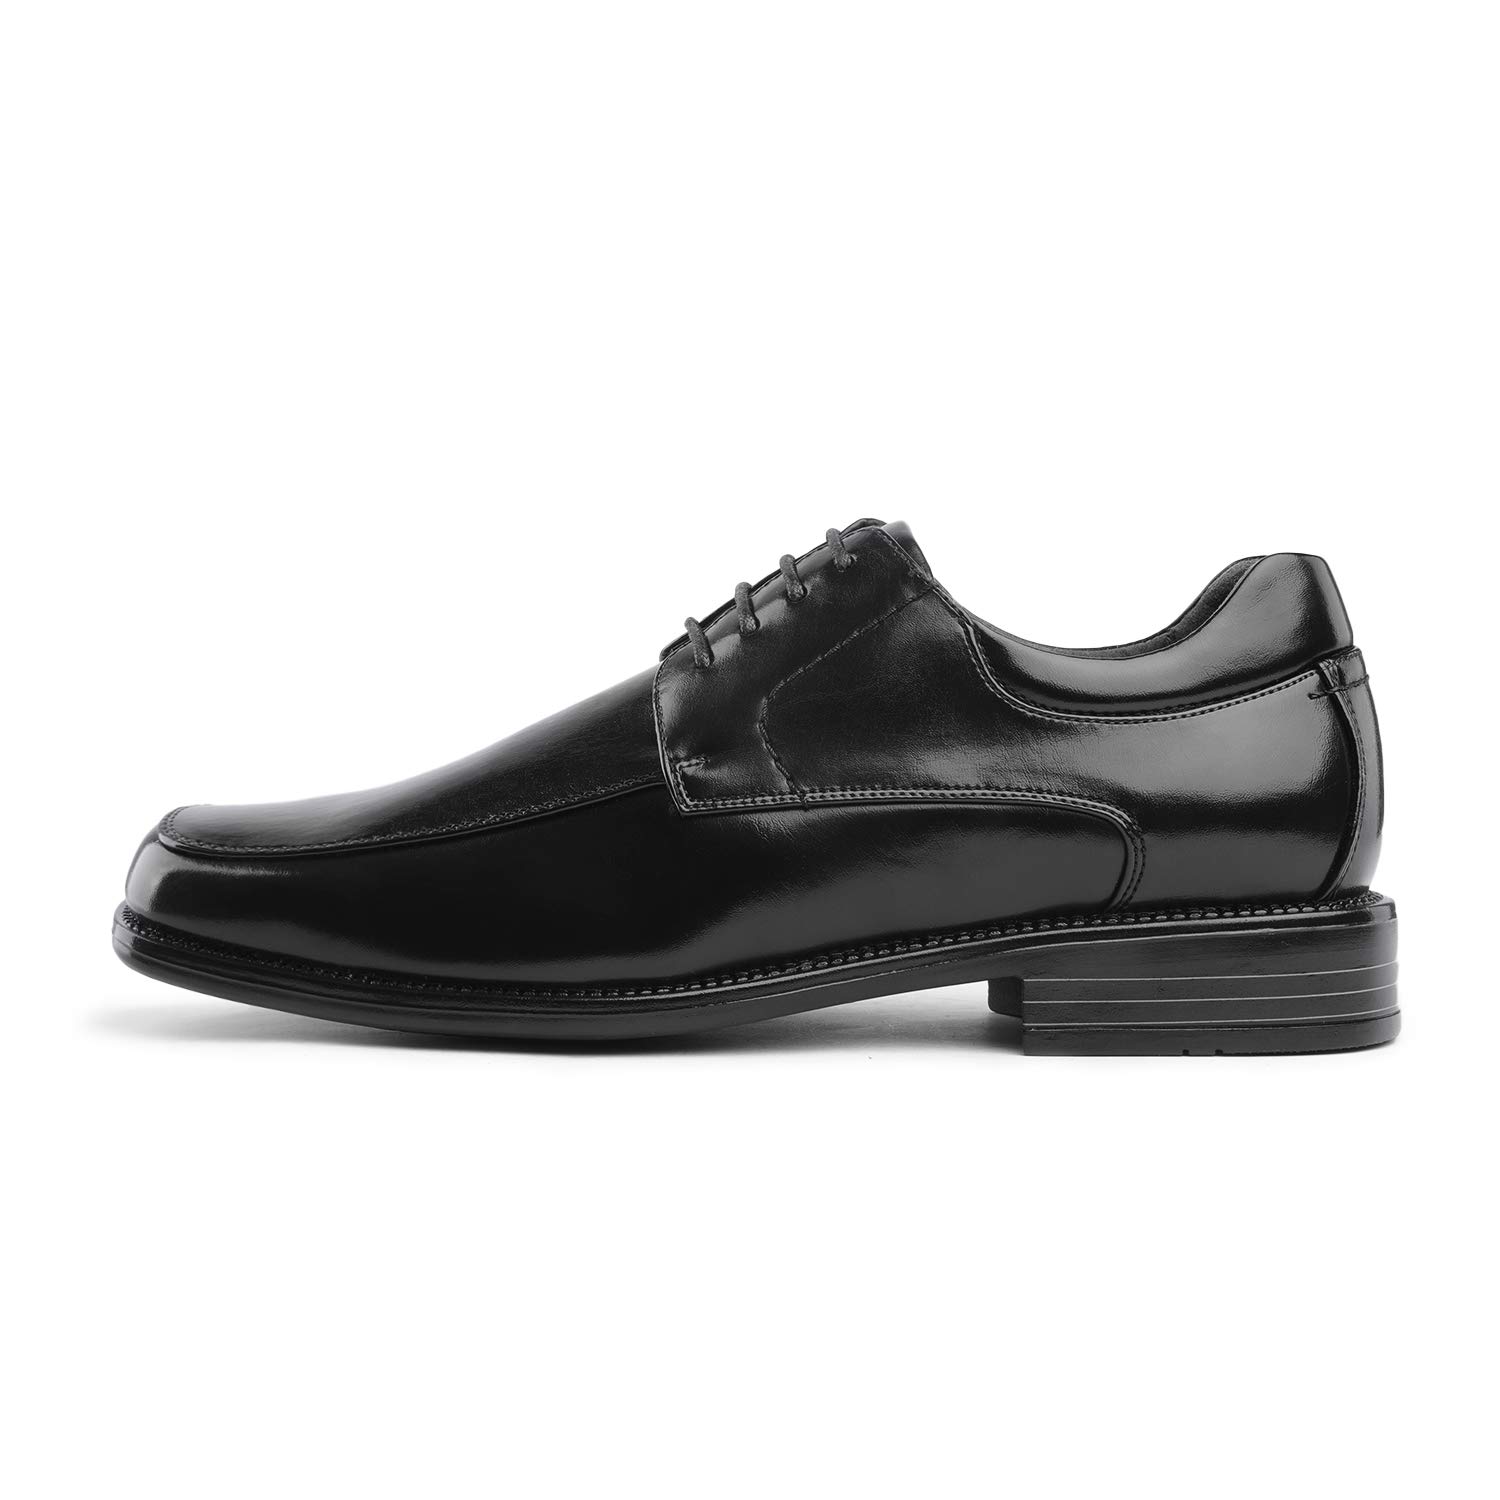 Bruno Marc Men's Black Square Toe Classic Business Dress Shoes Goldman-01-8 M US